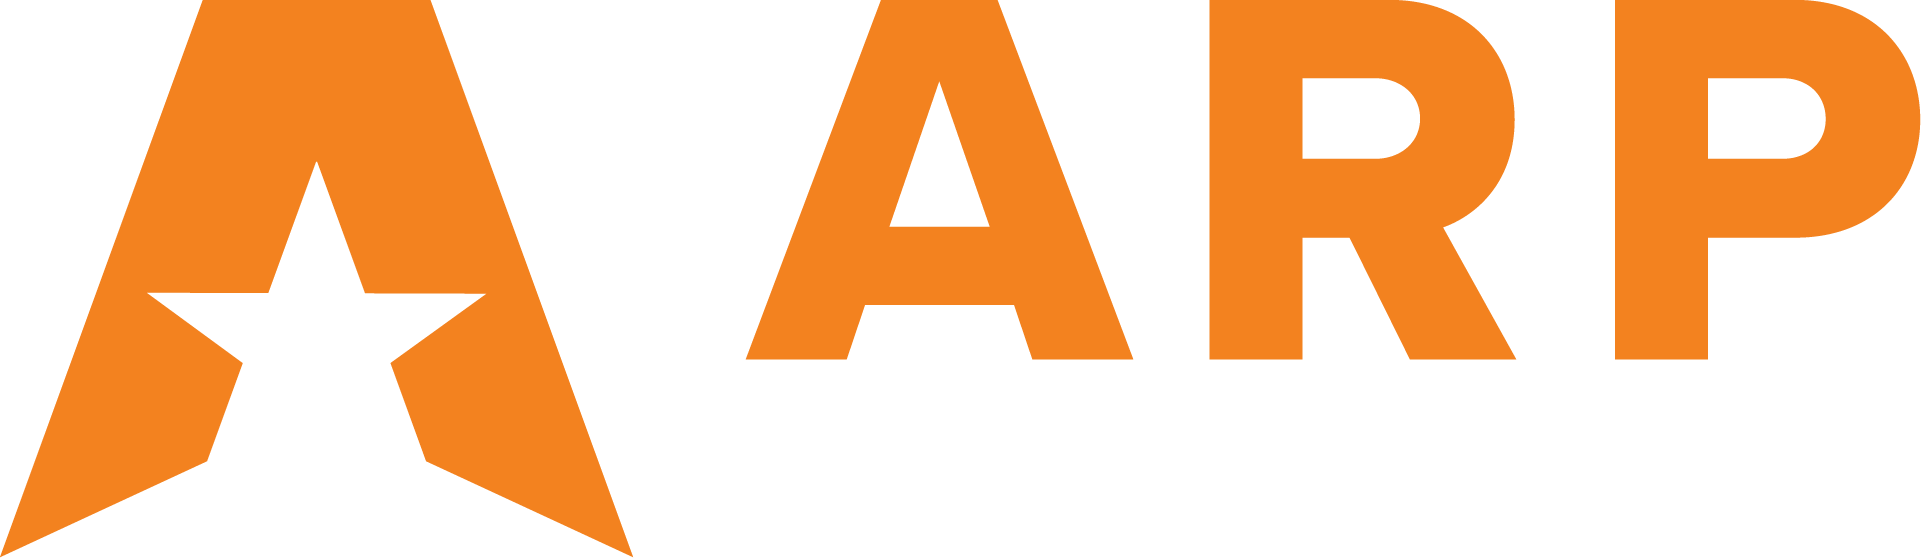 arp roofing